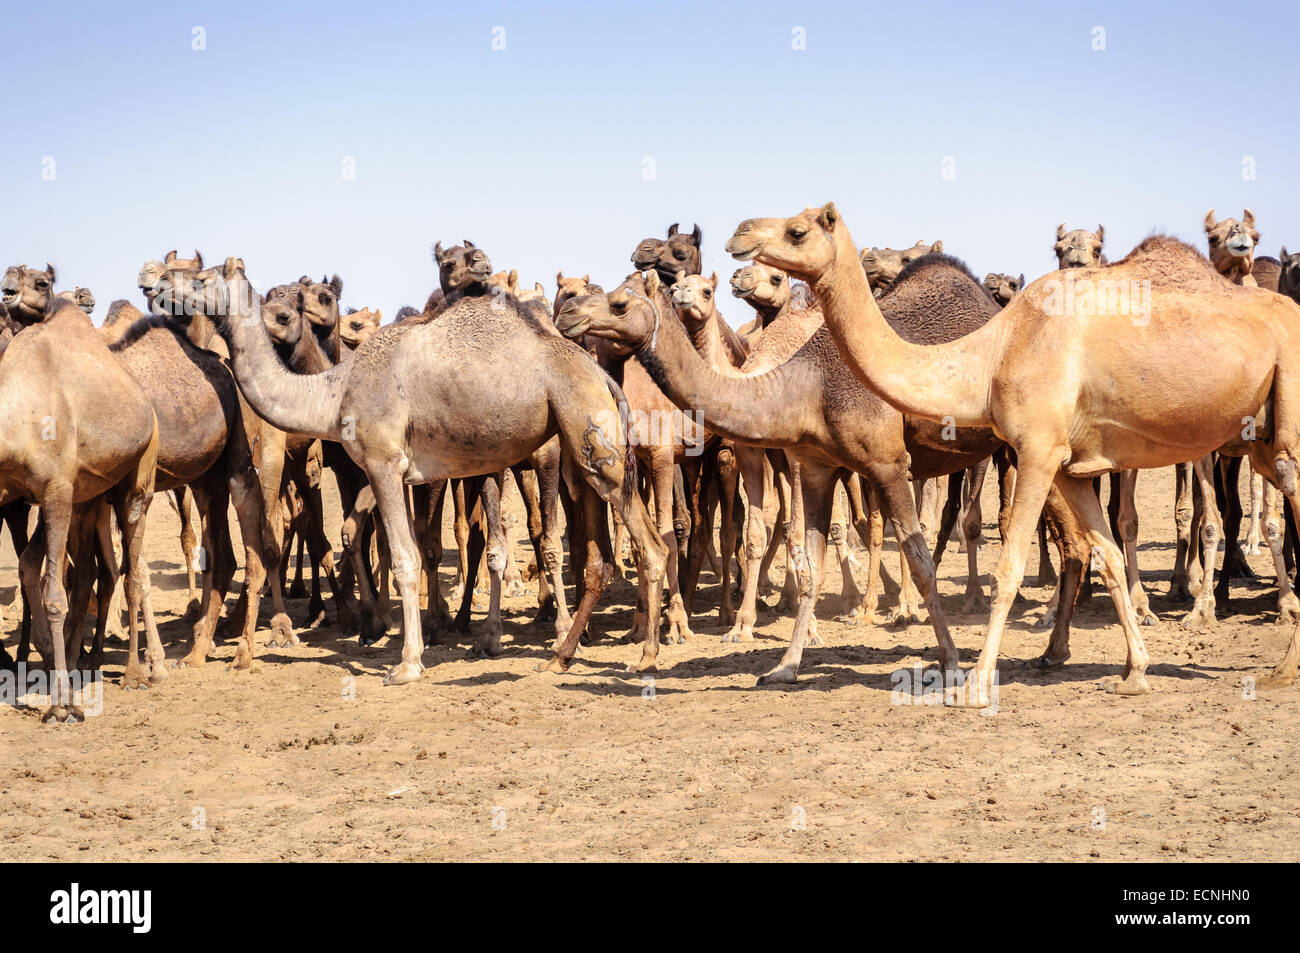 Allevamento di cammelli indiano, Camelus dromedarius, nei deserti del Rajasthan, India Foto Stock